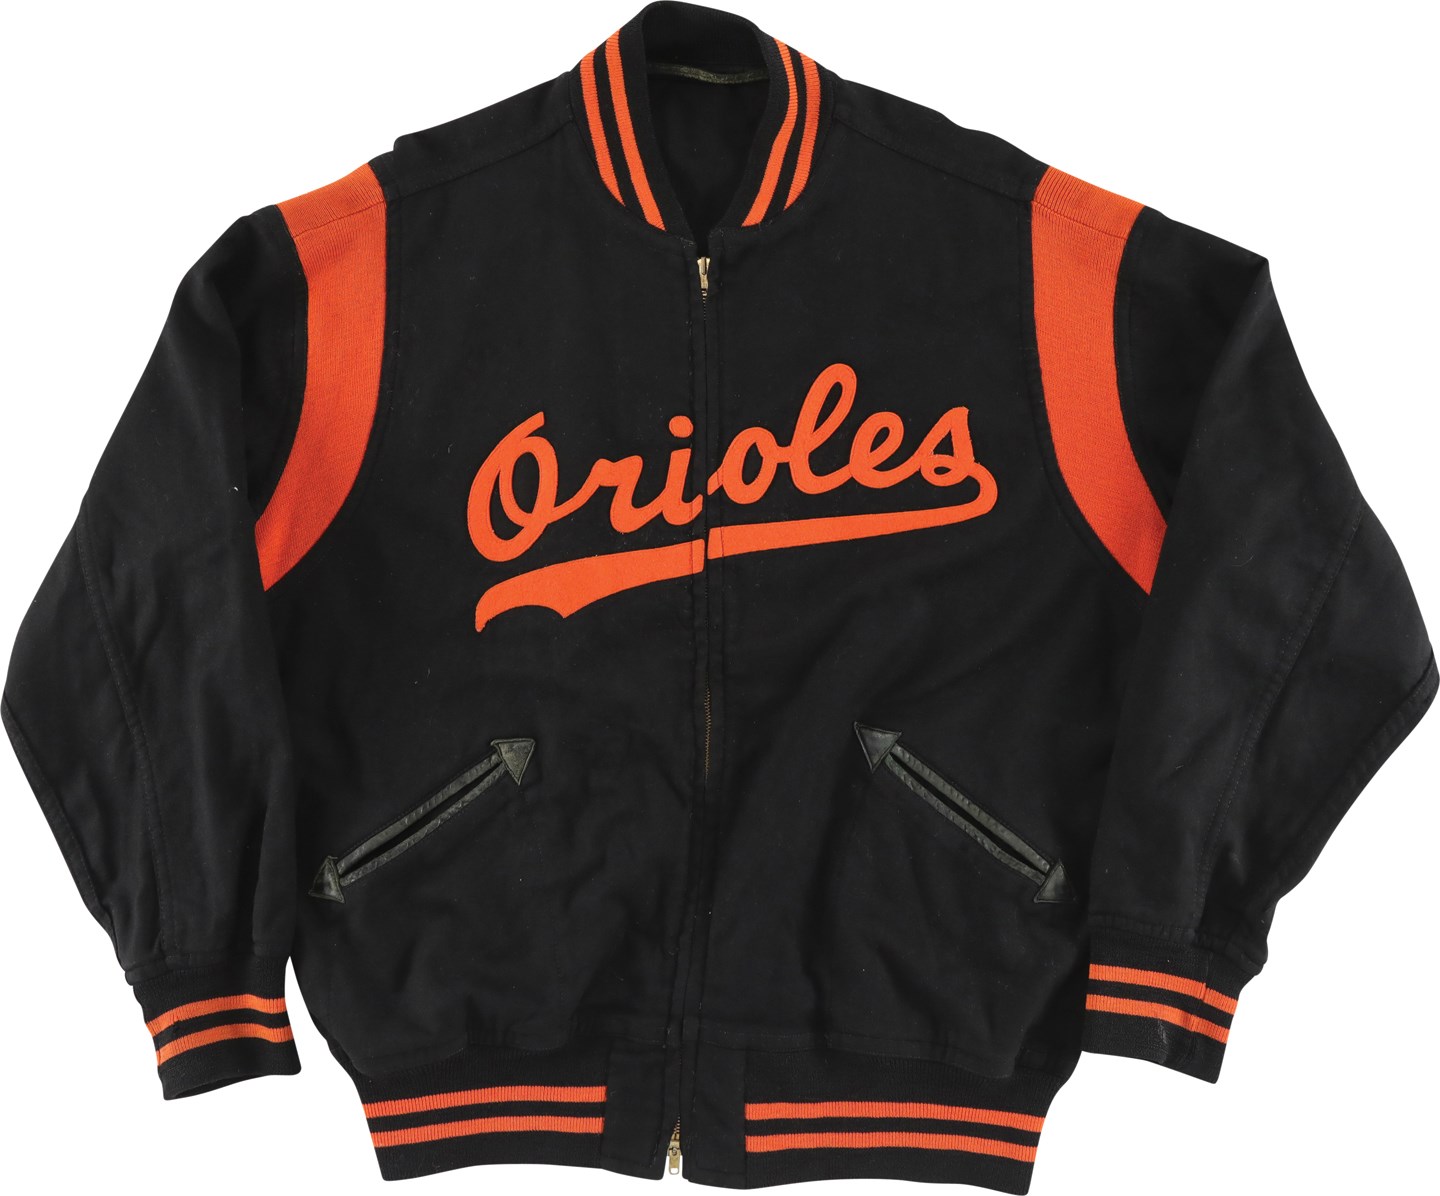 - Circa 1966 Eddie Fisher Baltimore Orioles Jacket